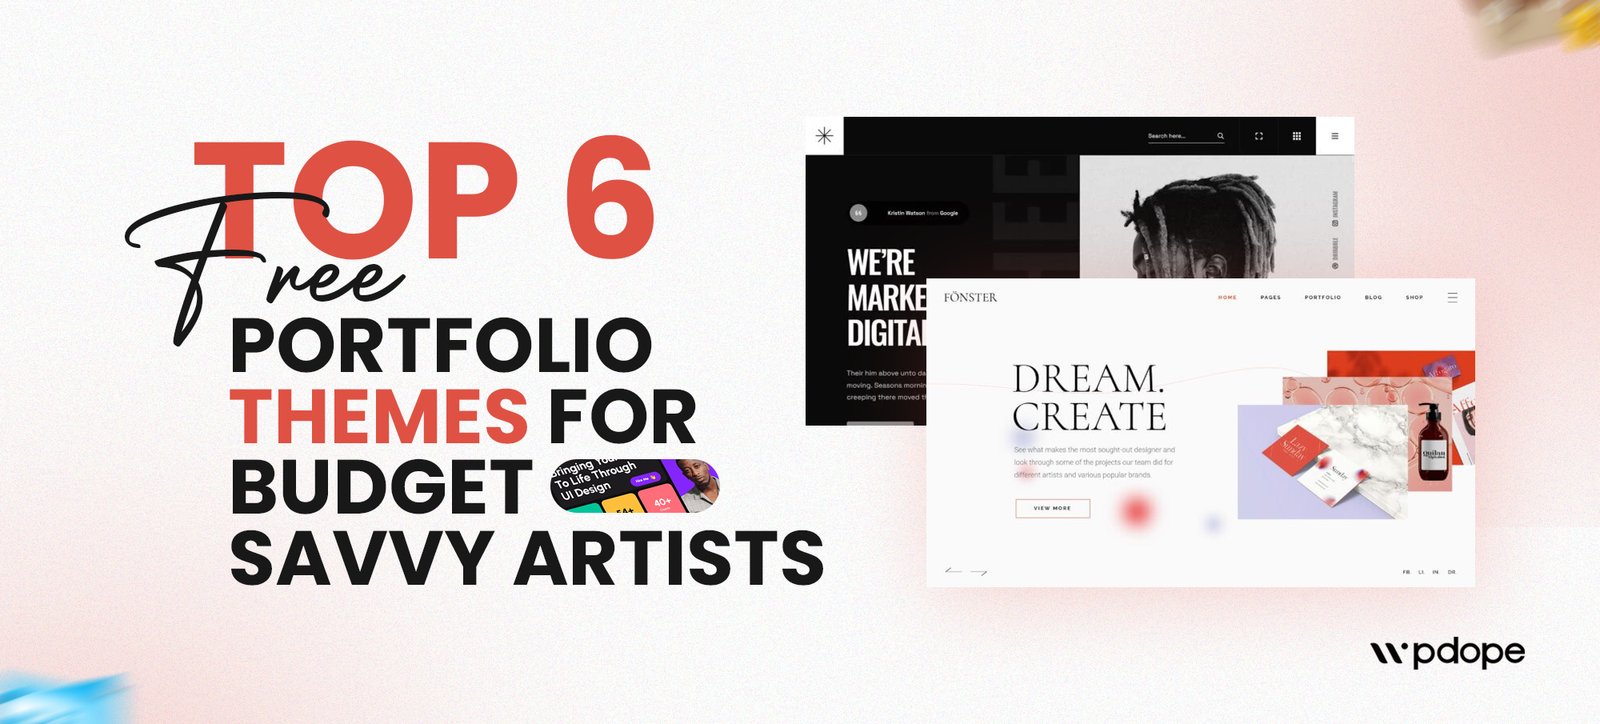 Top 6 Free Portfolio Themes for Budget-Savvy Artists